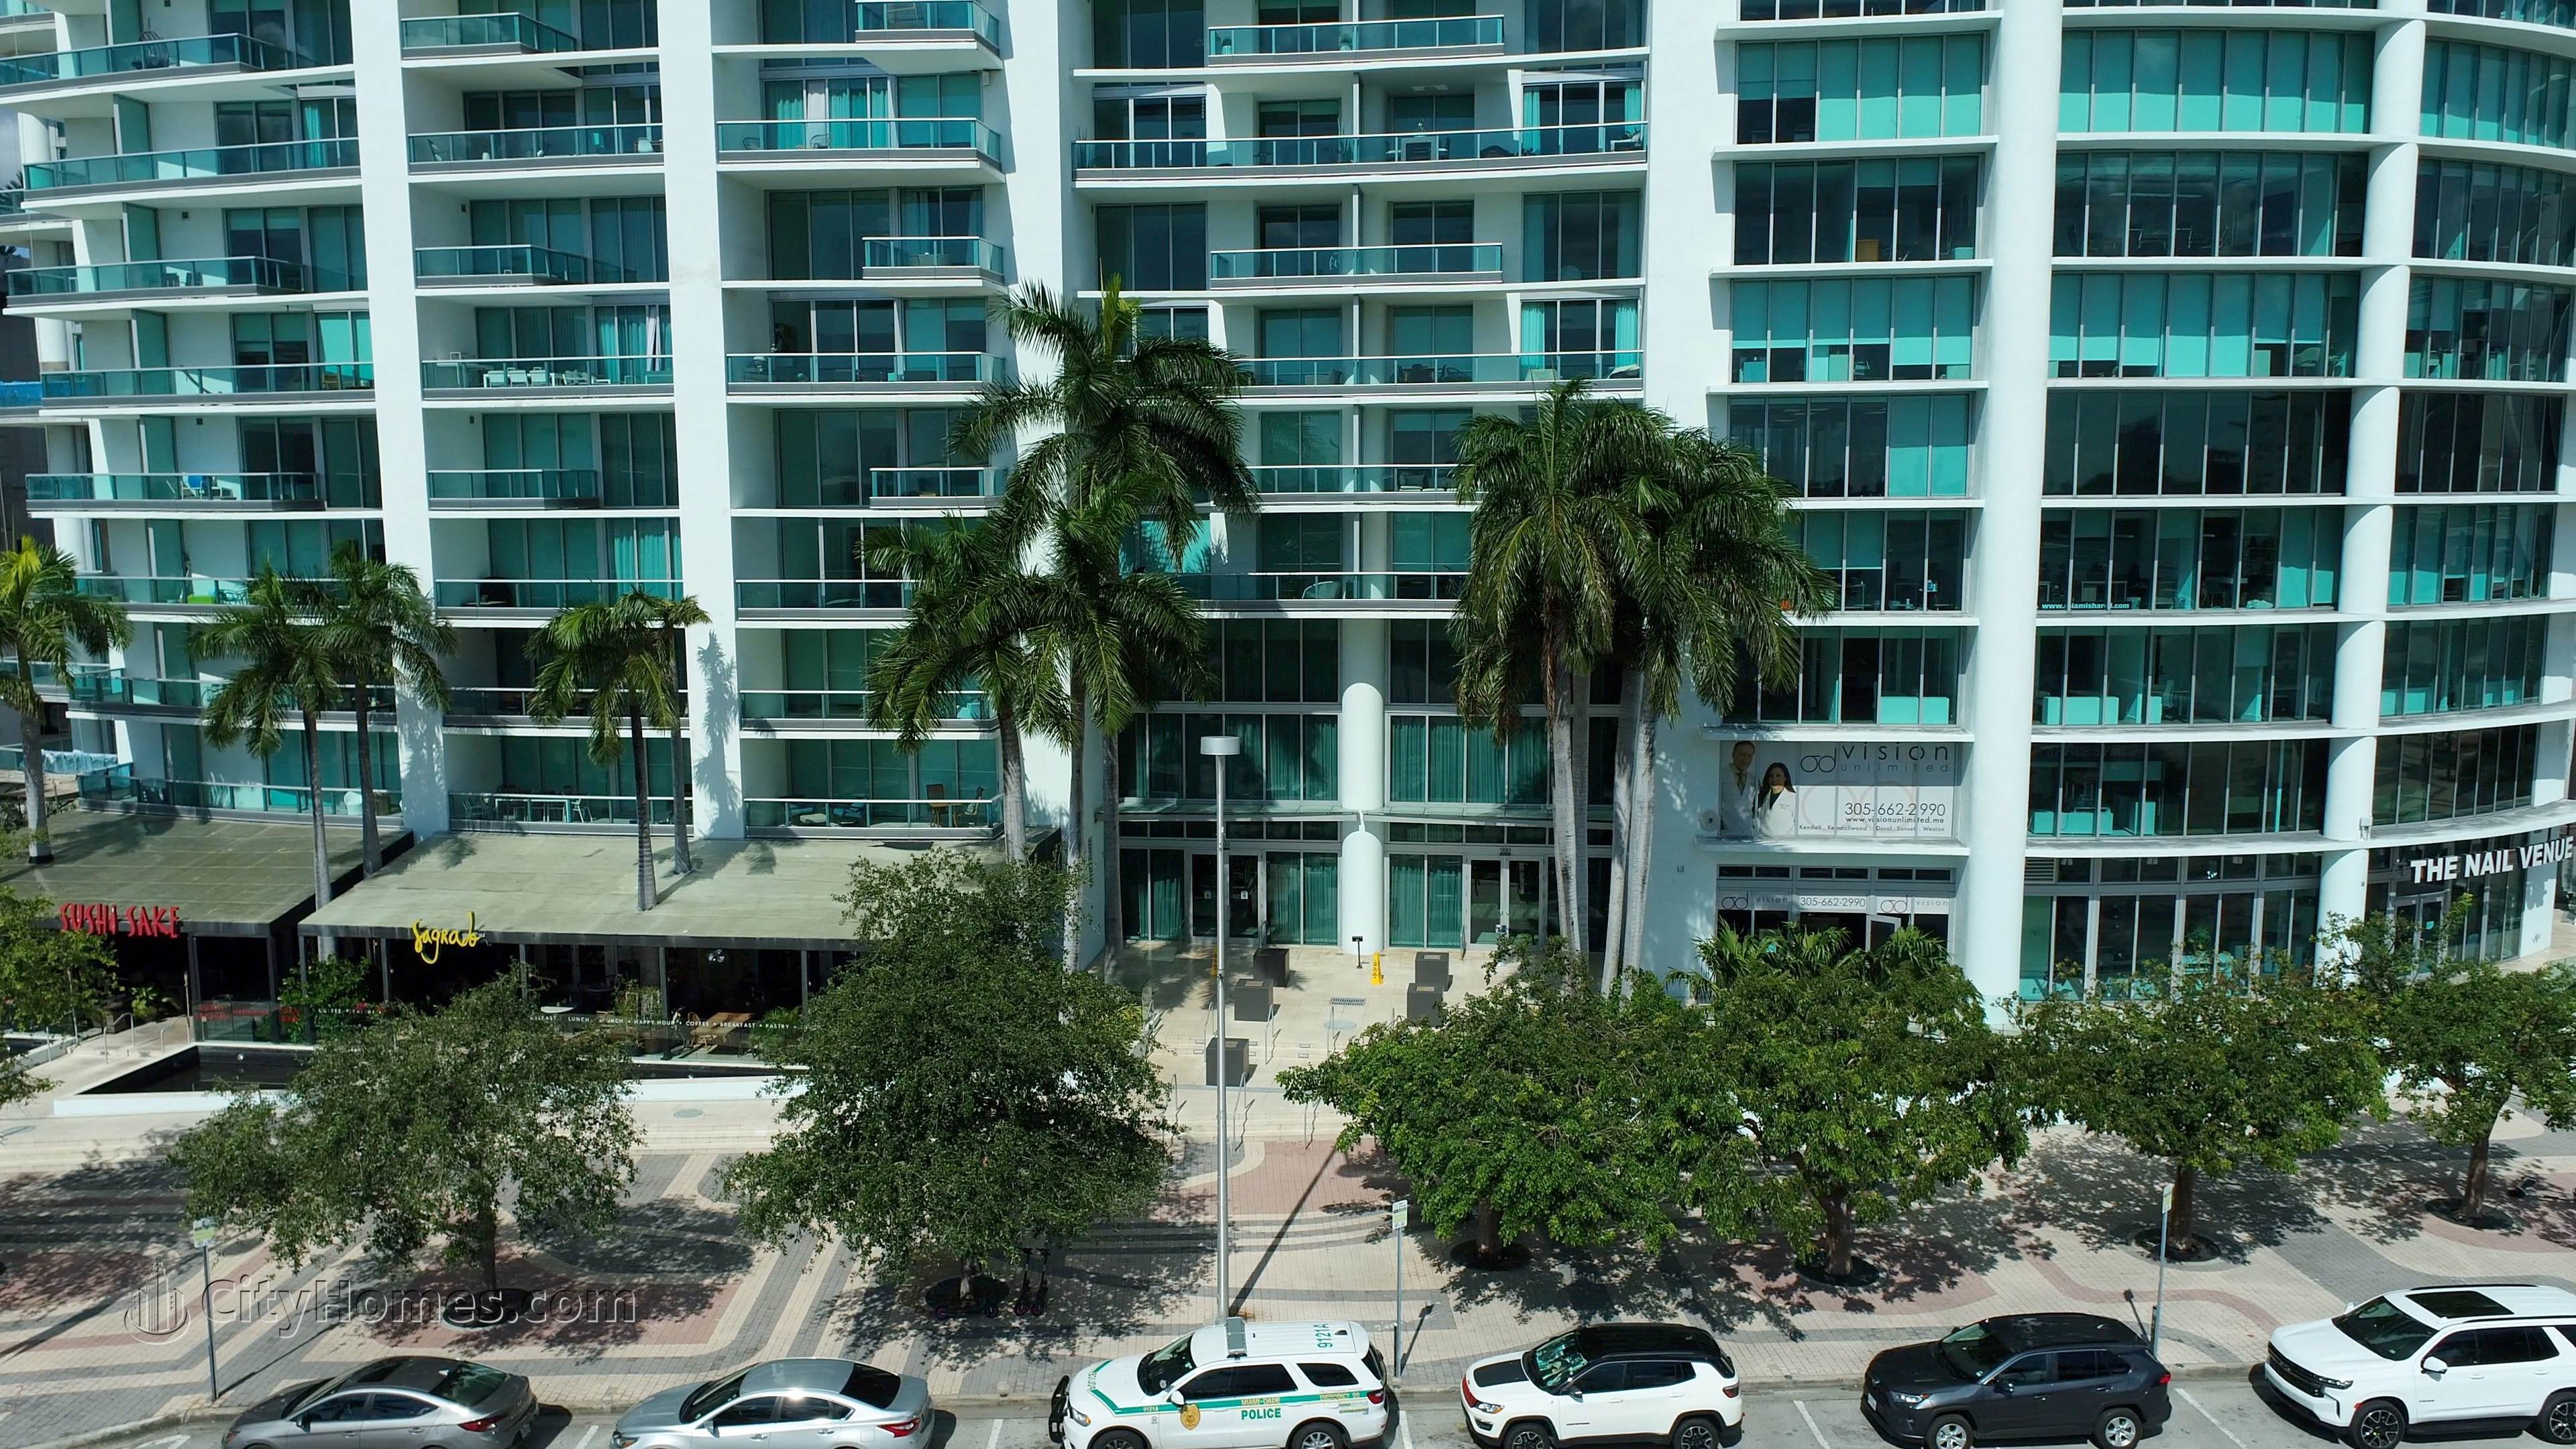 6. 900 Biscayne Bay здание в 900 Biscayne Boulevard, Miami, FL 33132